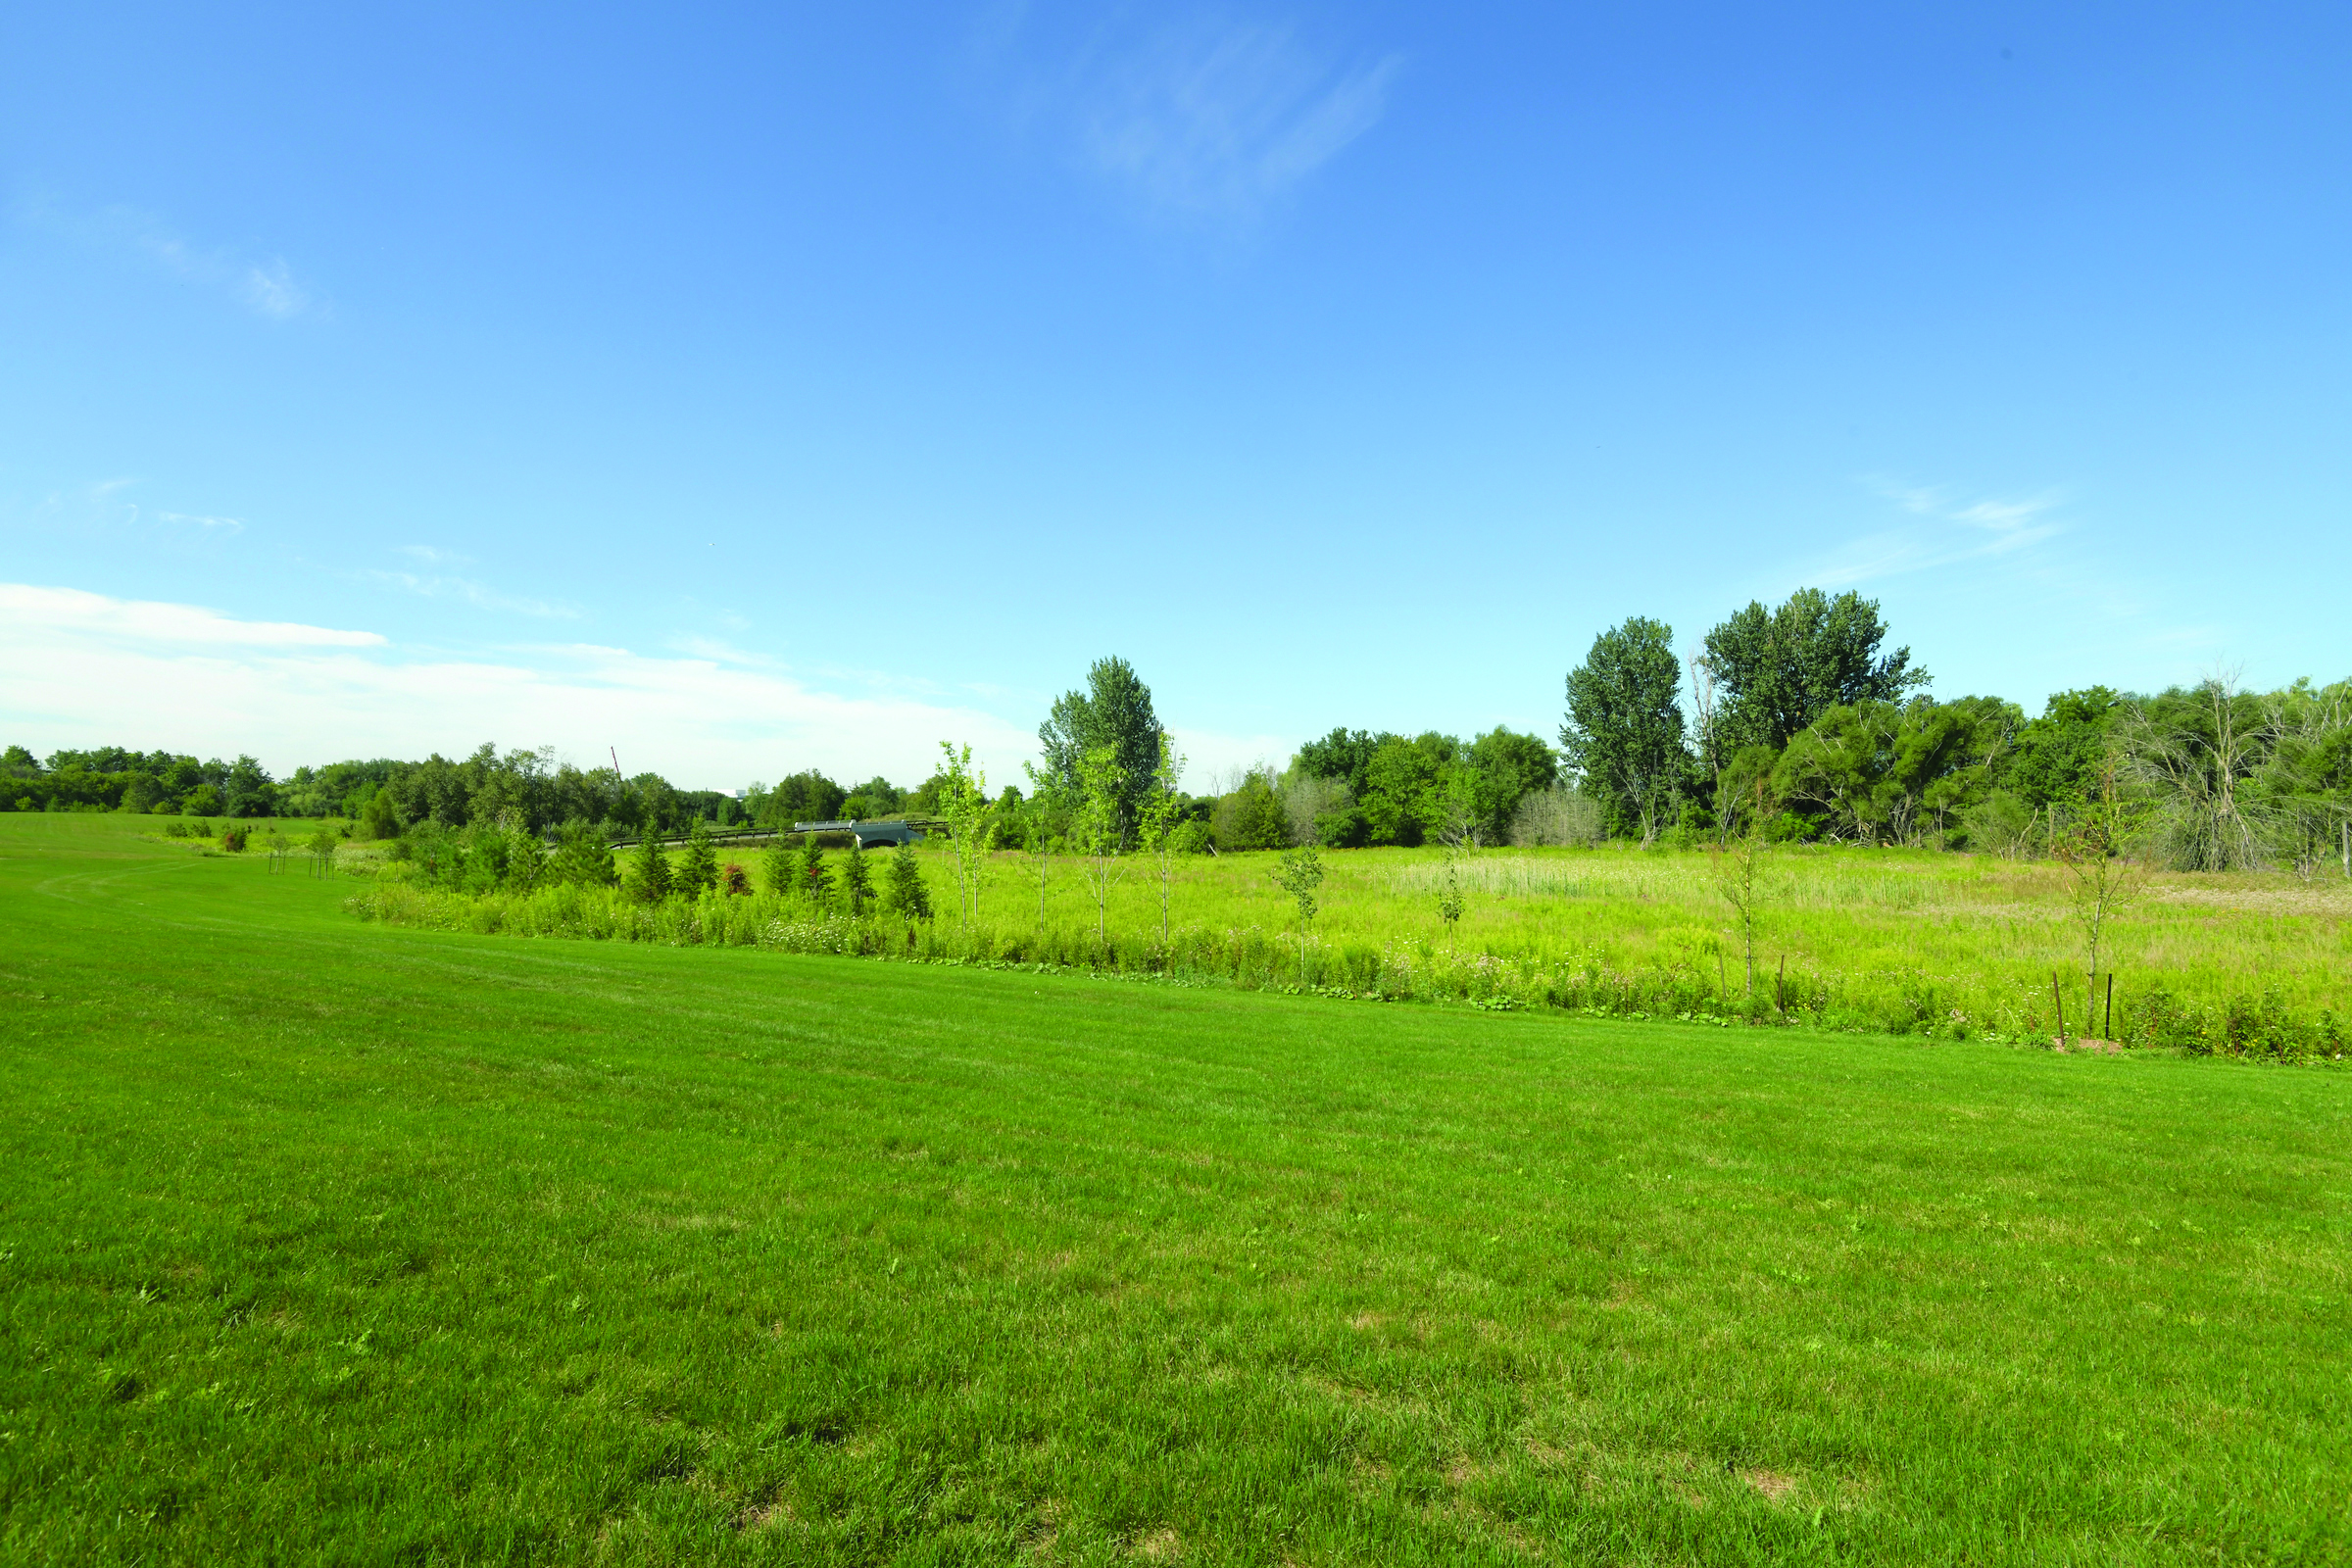 The meadow at Elgin Mills